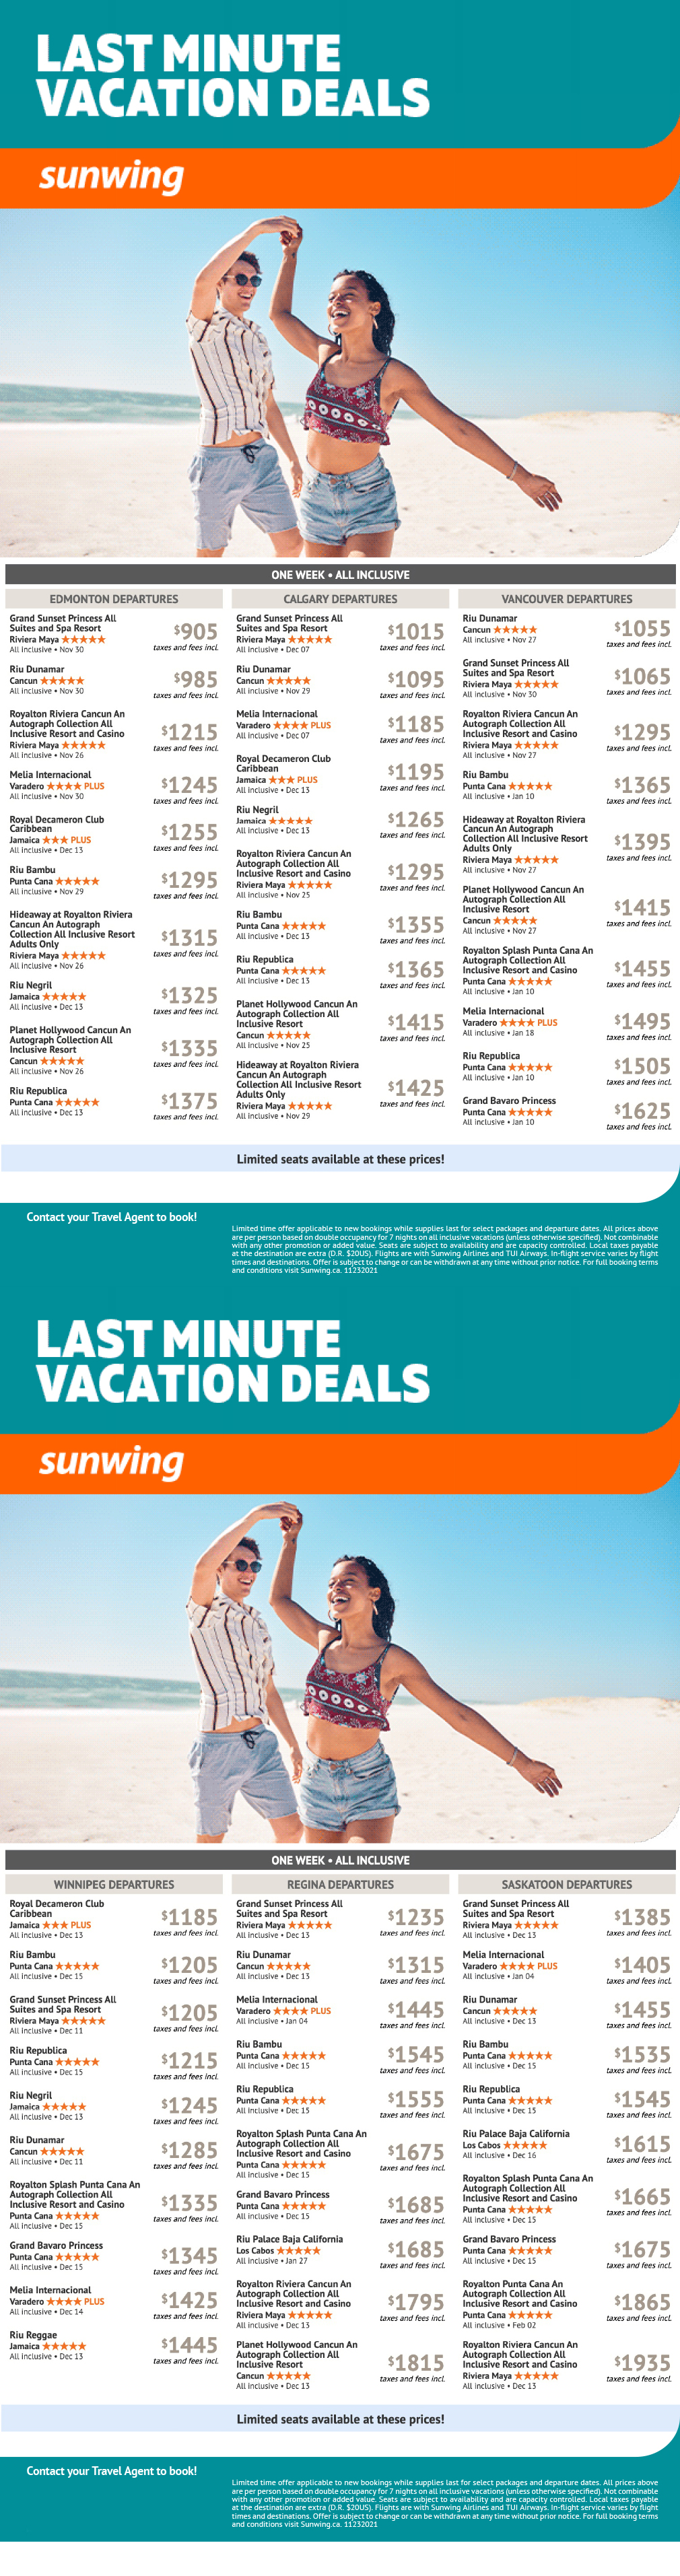 Last Minute Vacation Deals